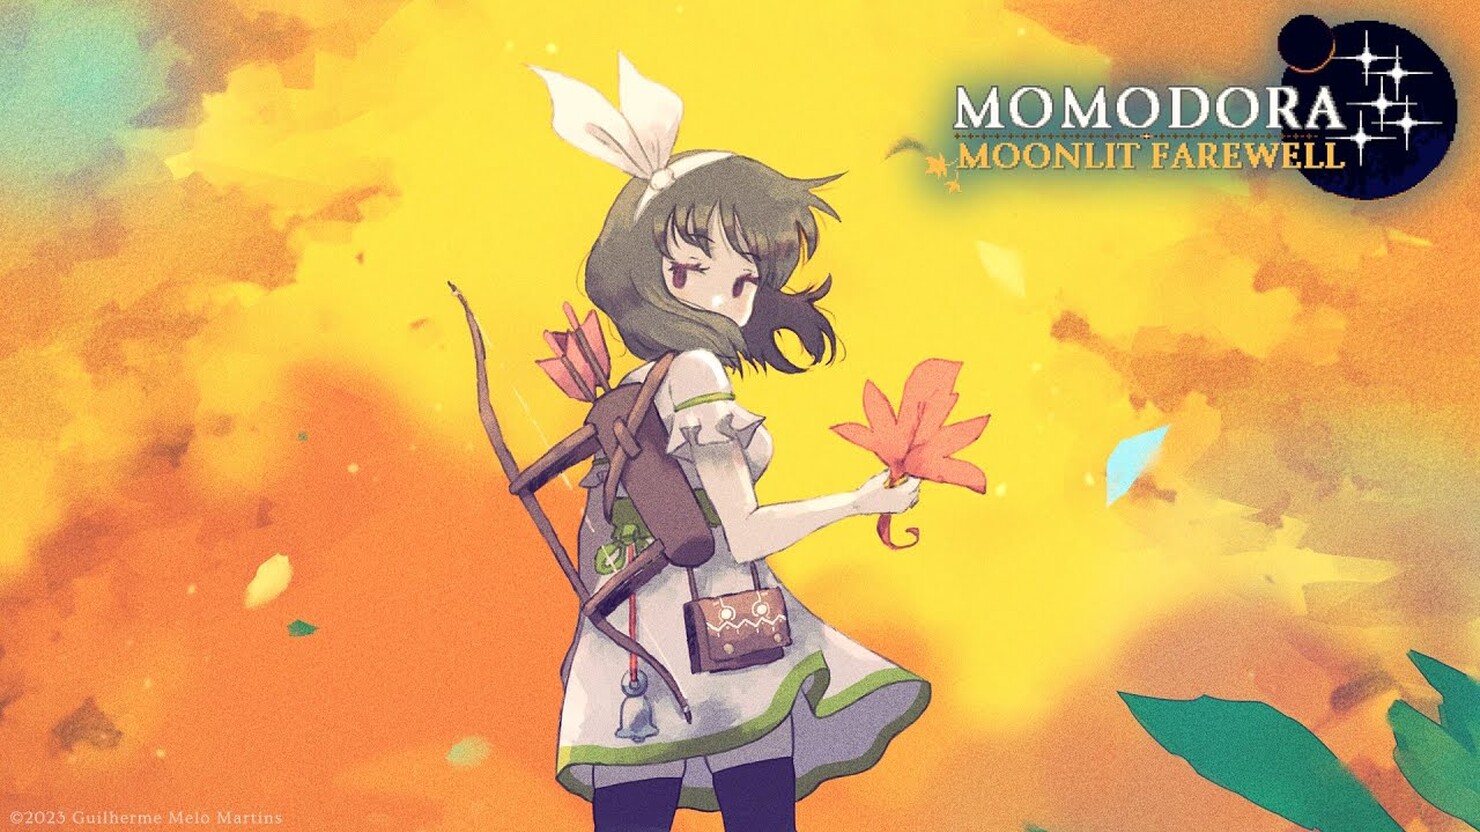 Momodora: Moonlit Farewell #2 (Плуния, архидемон-гарпия)